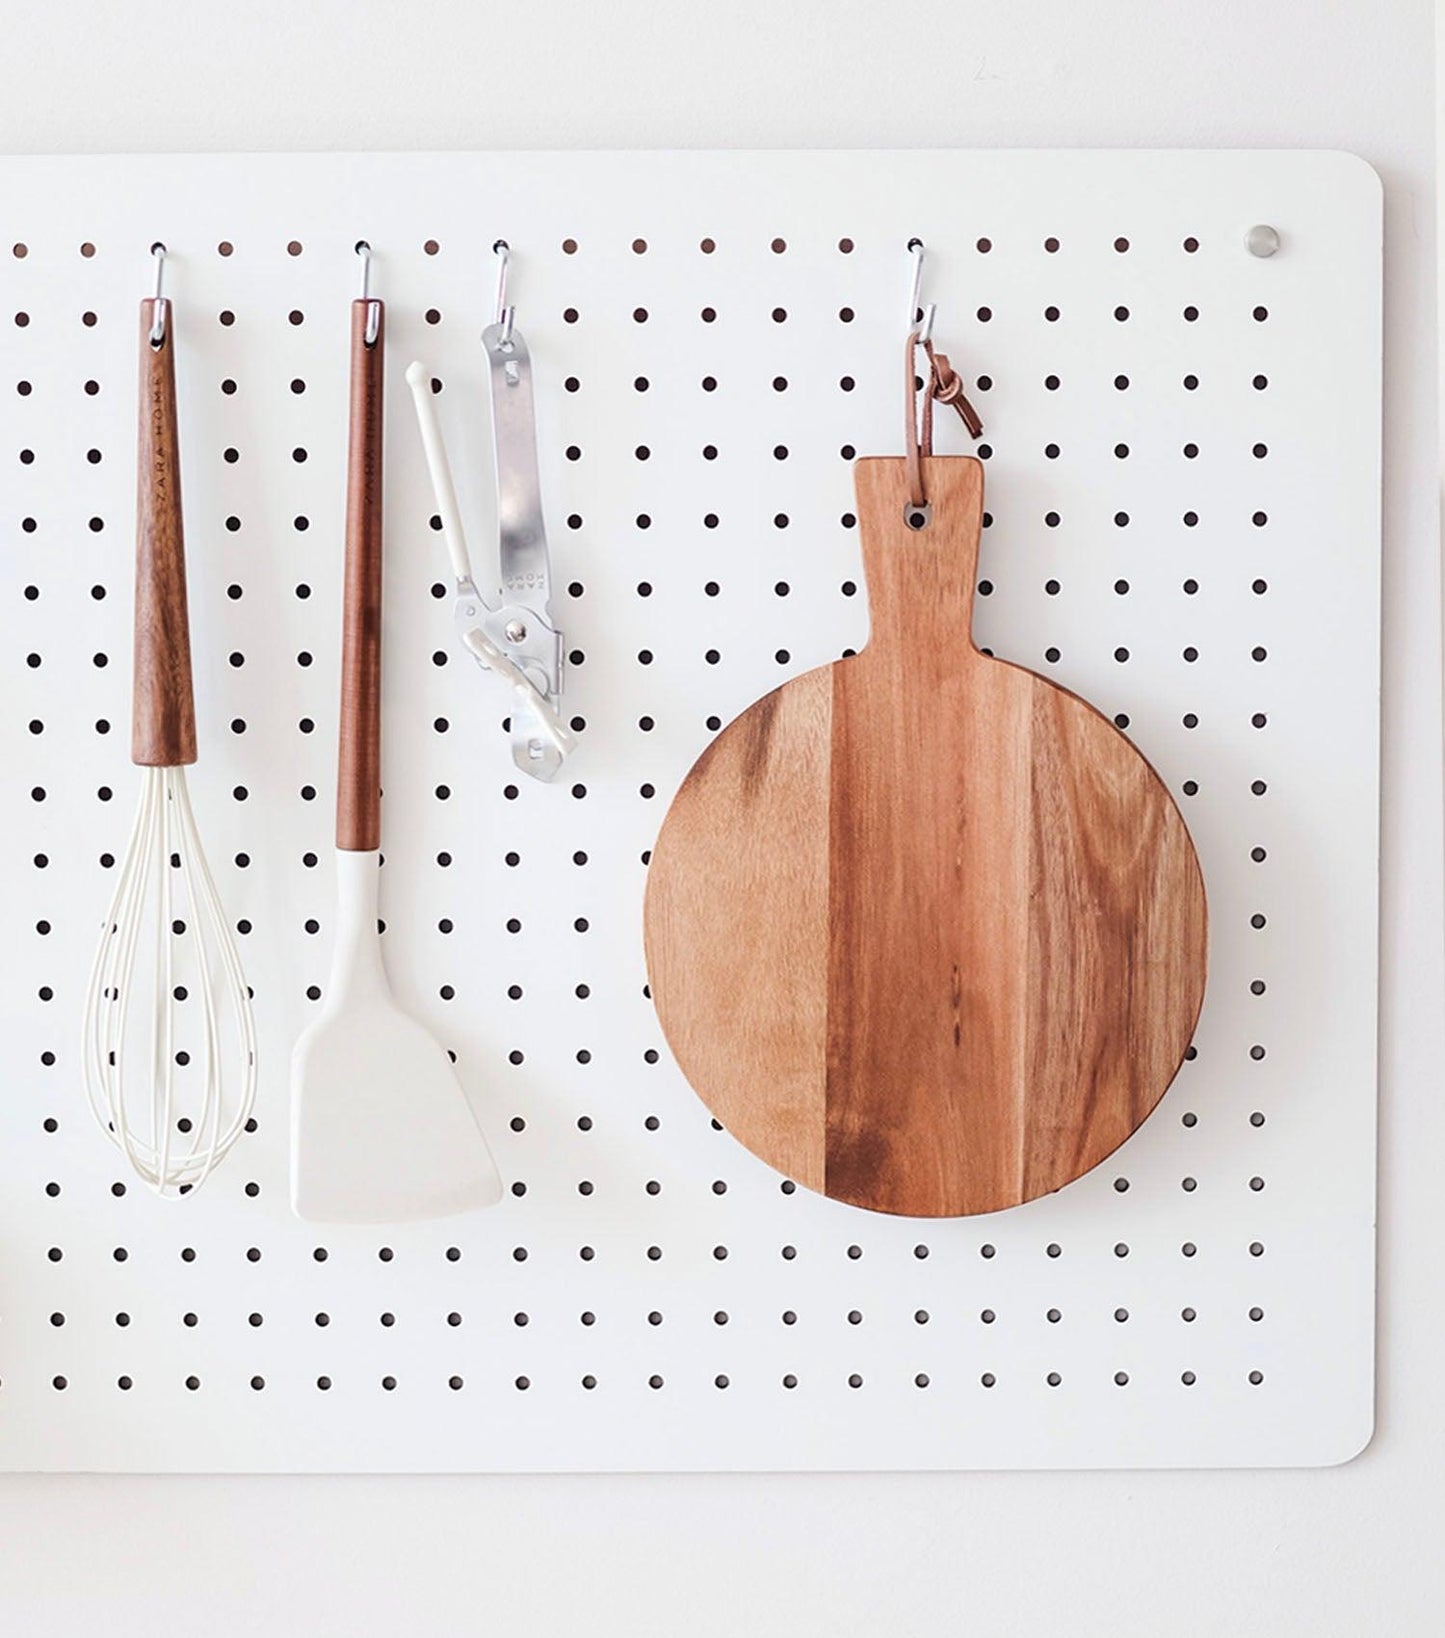 Kit cocina madera 120x50cm - Tienda Girom